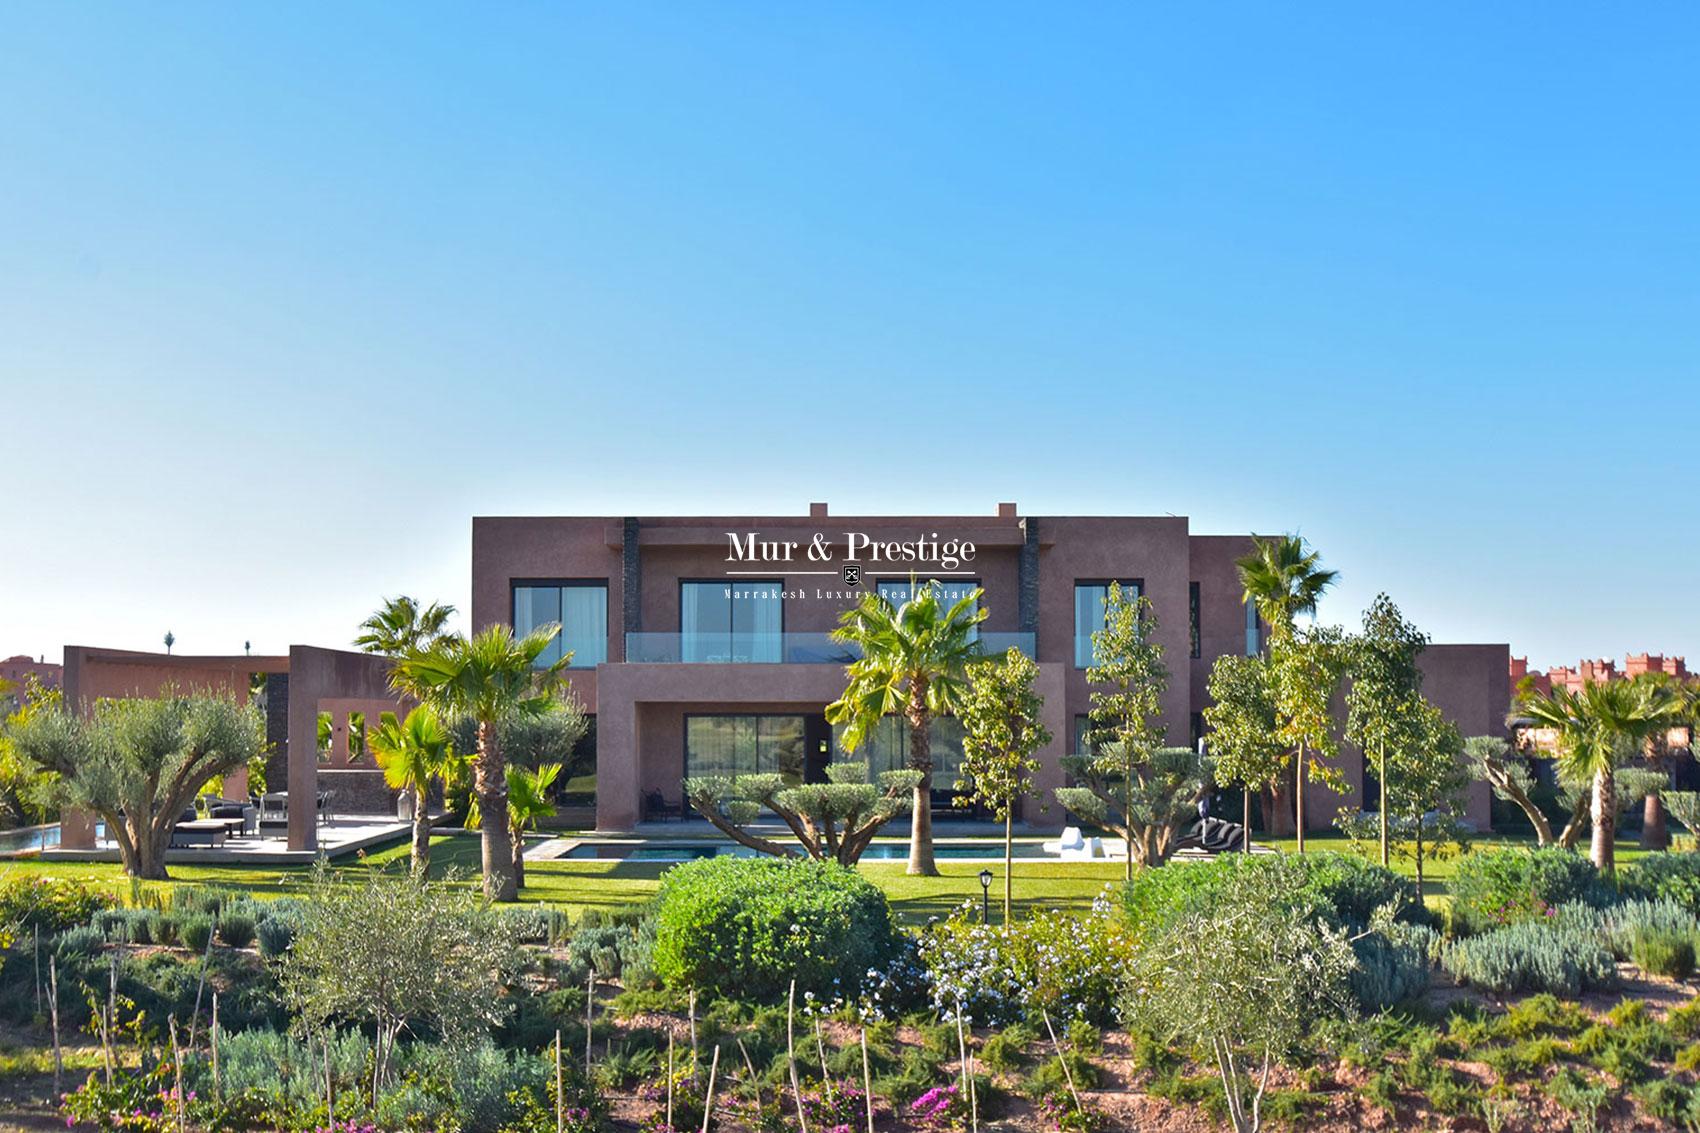 Villa en vente sur golf Amelkis Marrakech